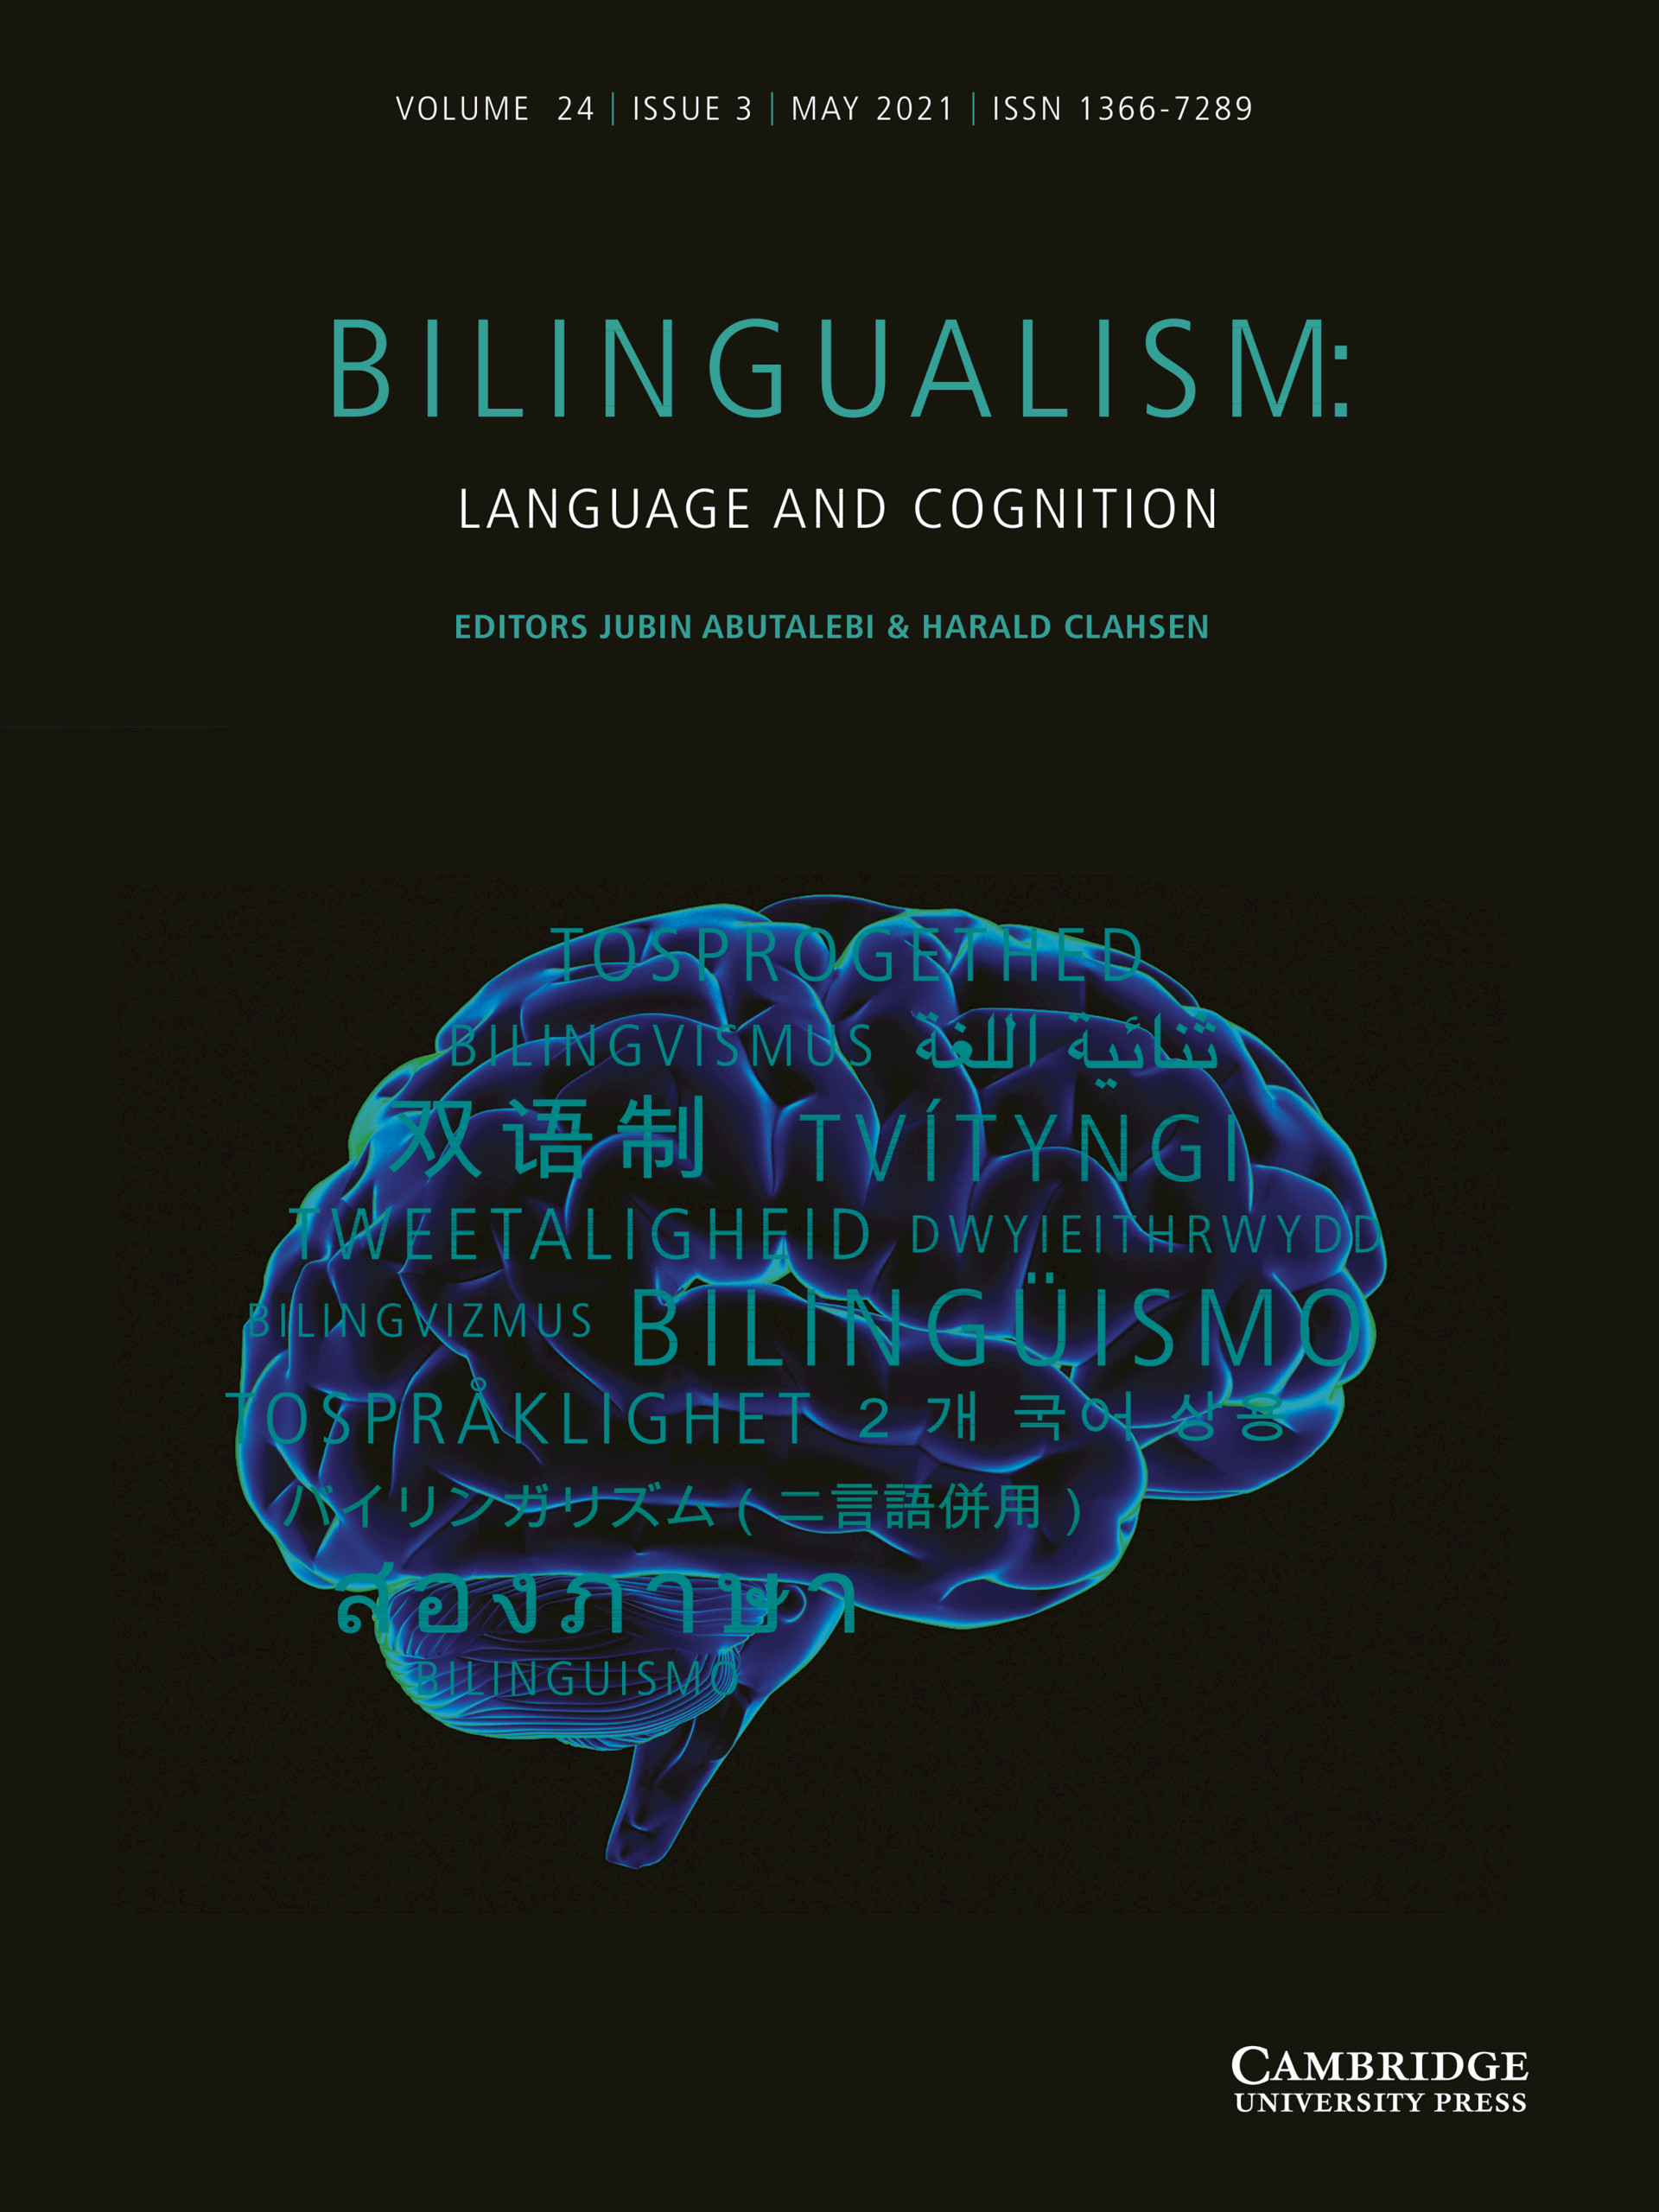 linguistic essay on bilingualism